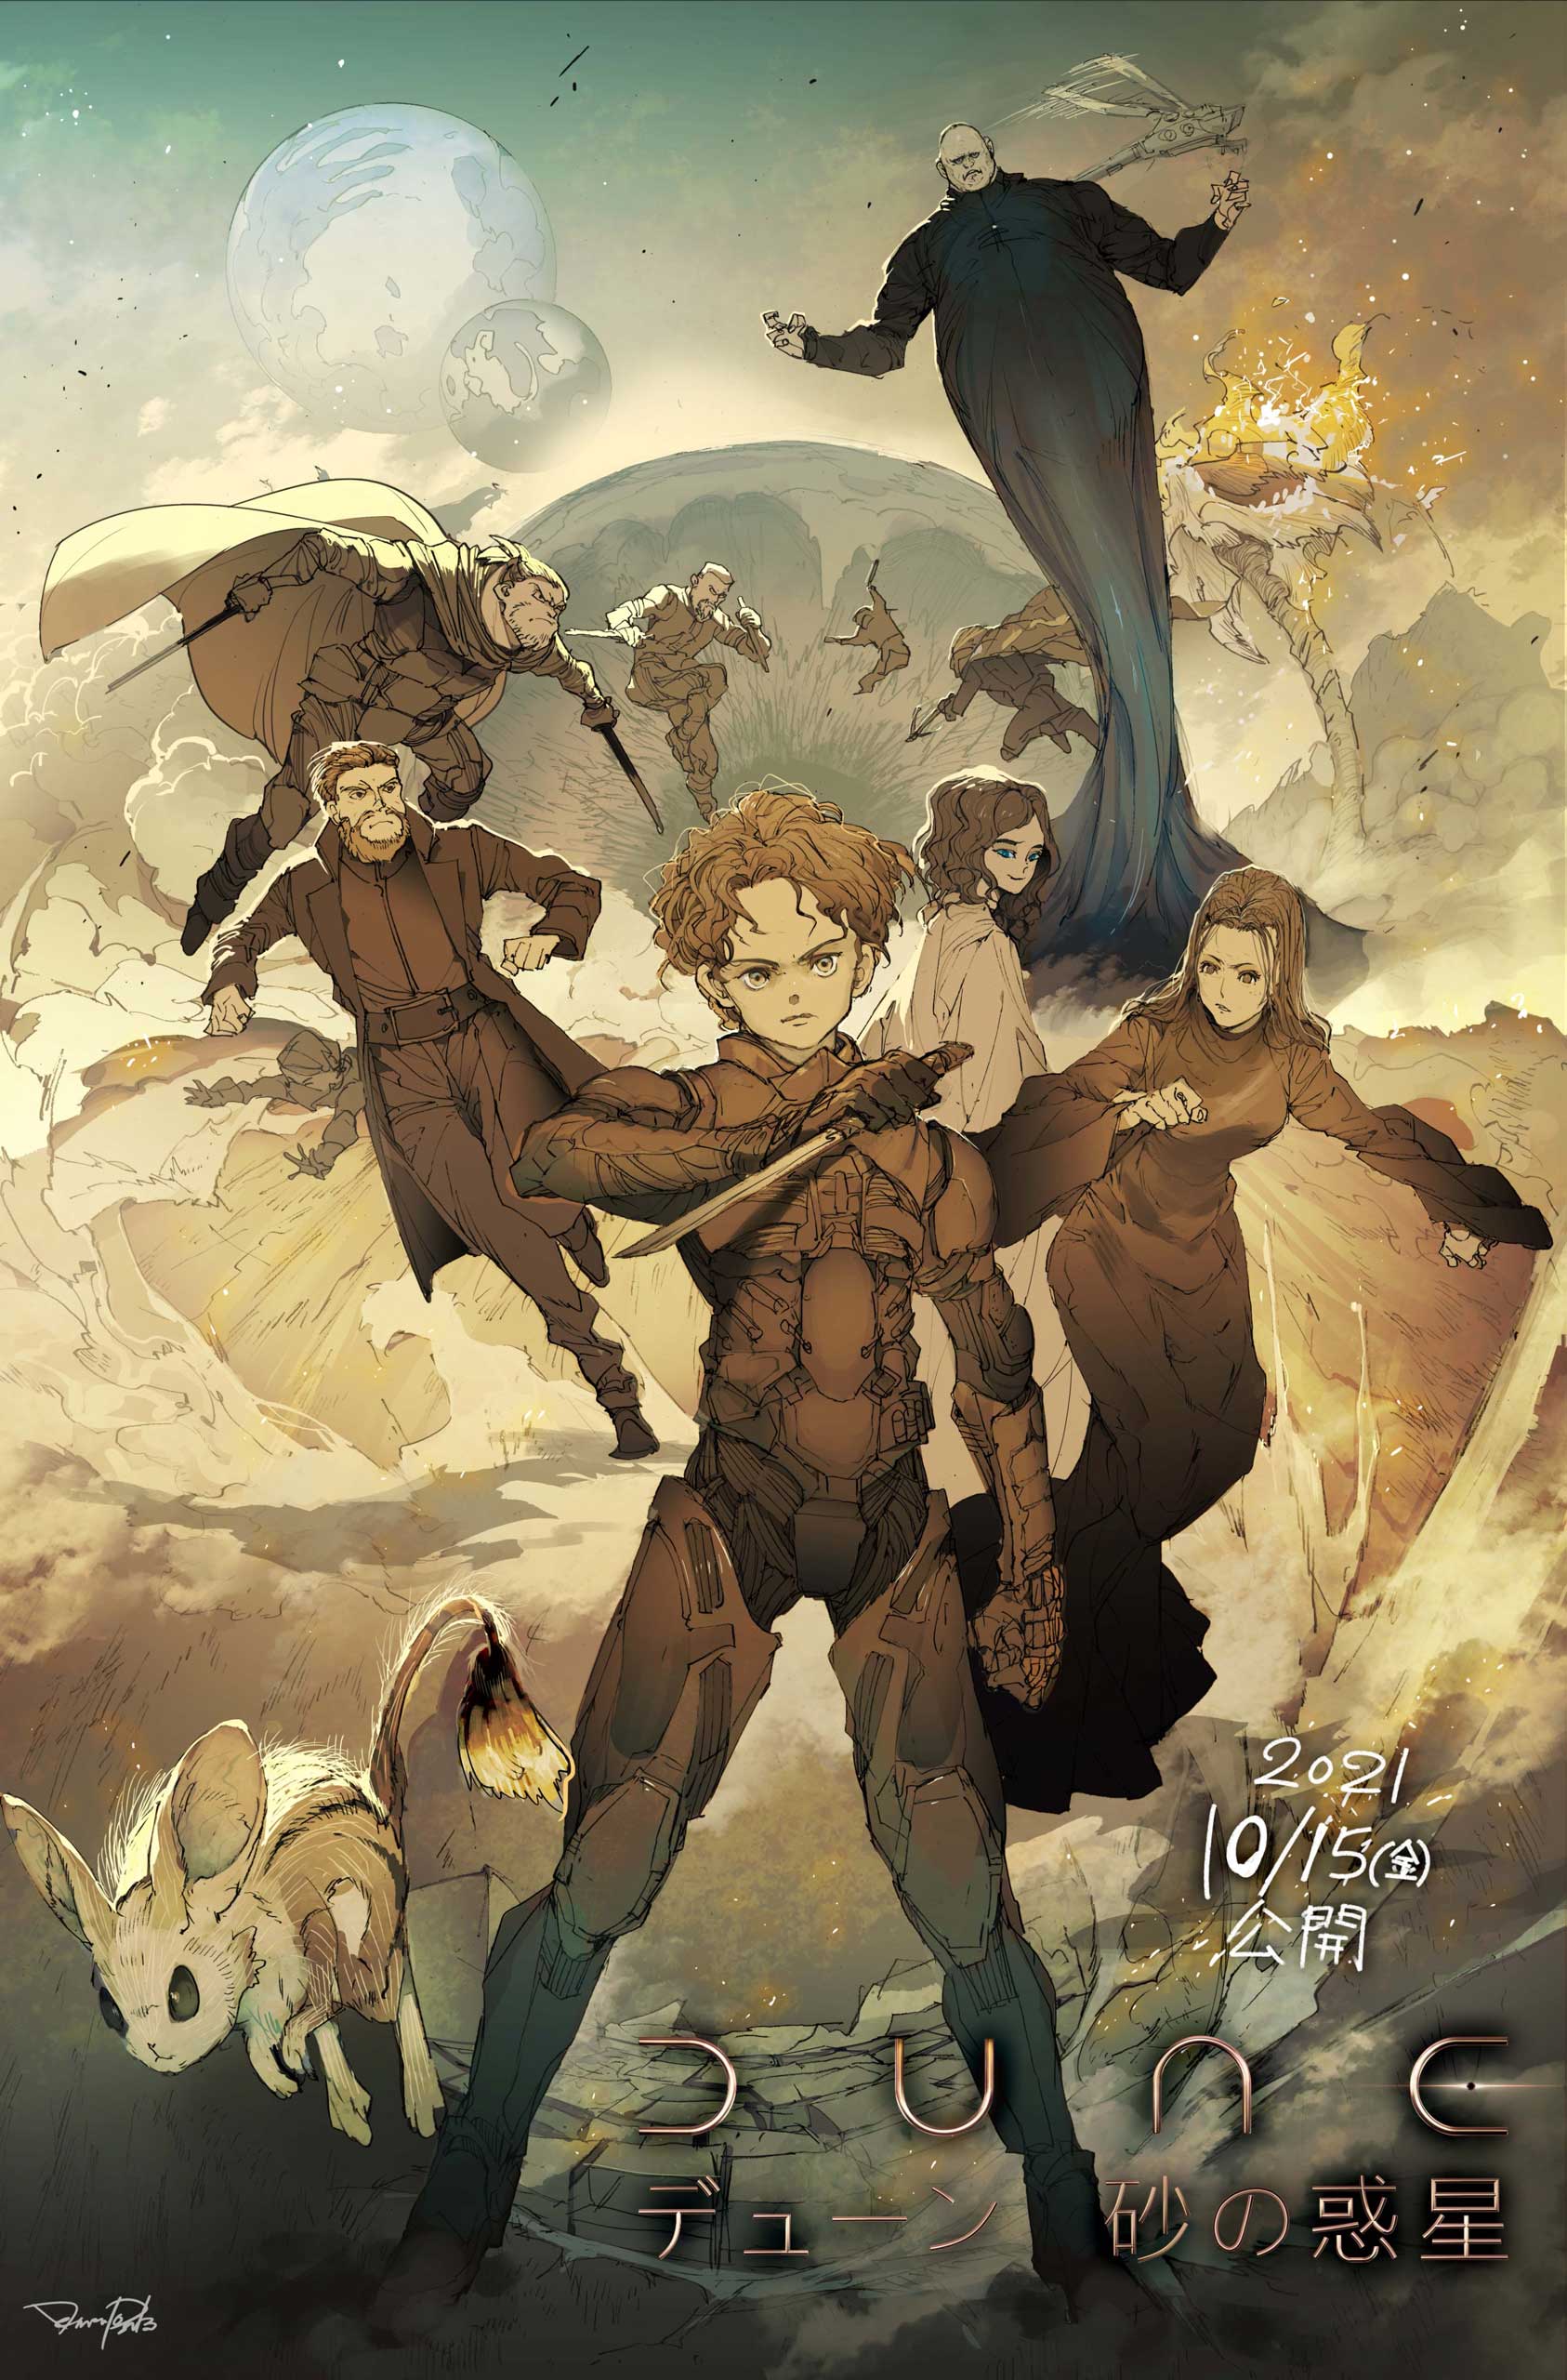 Anime style Dune movie poster, illustrated by Posuka Demizu.